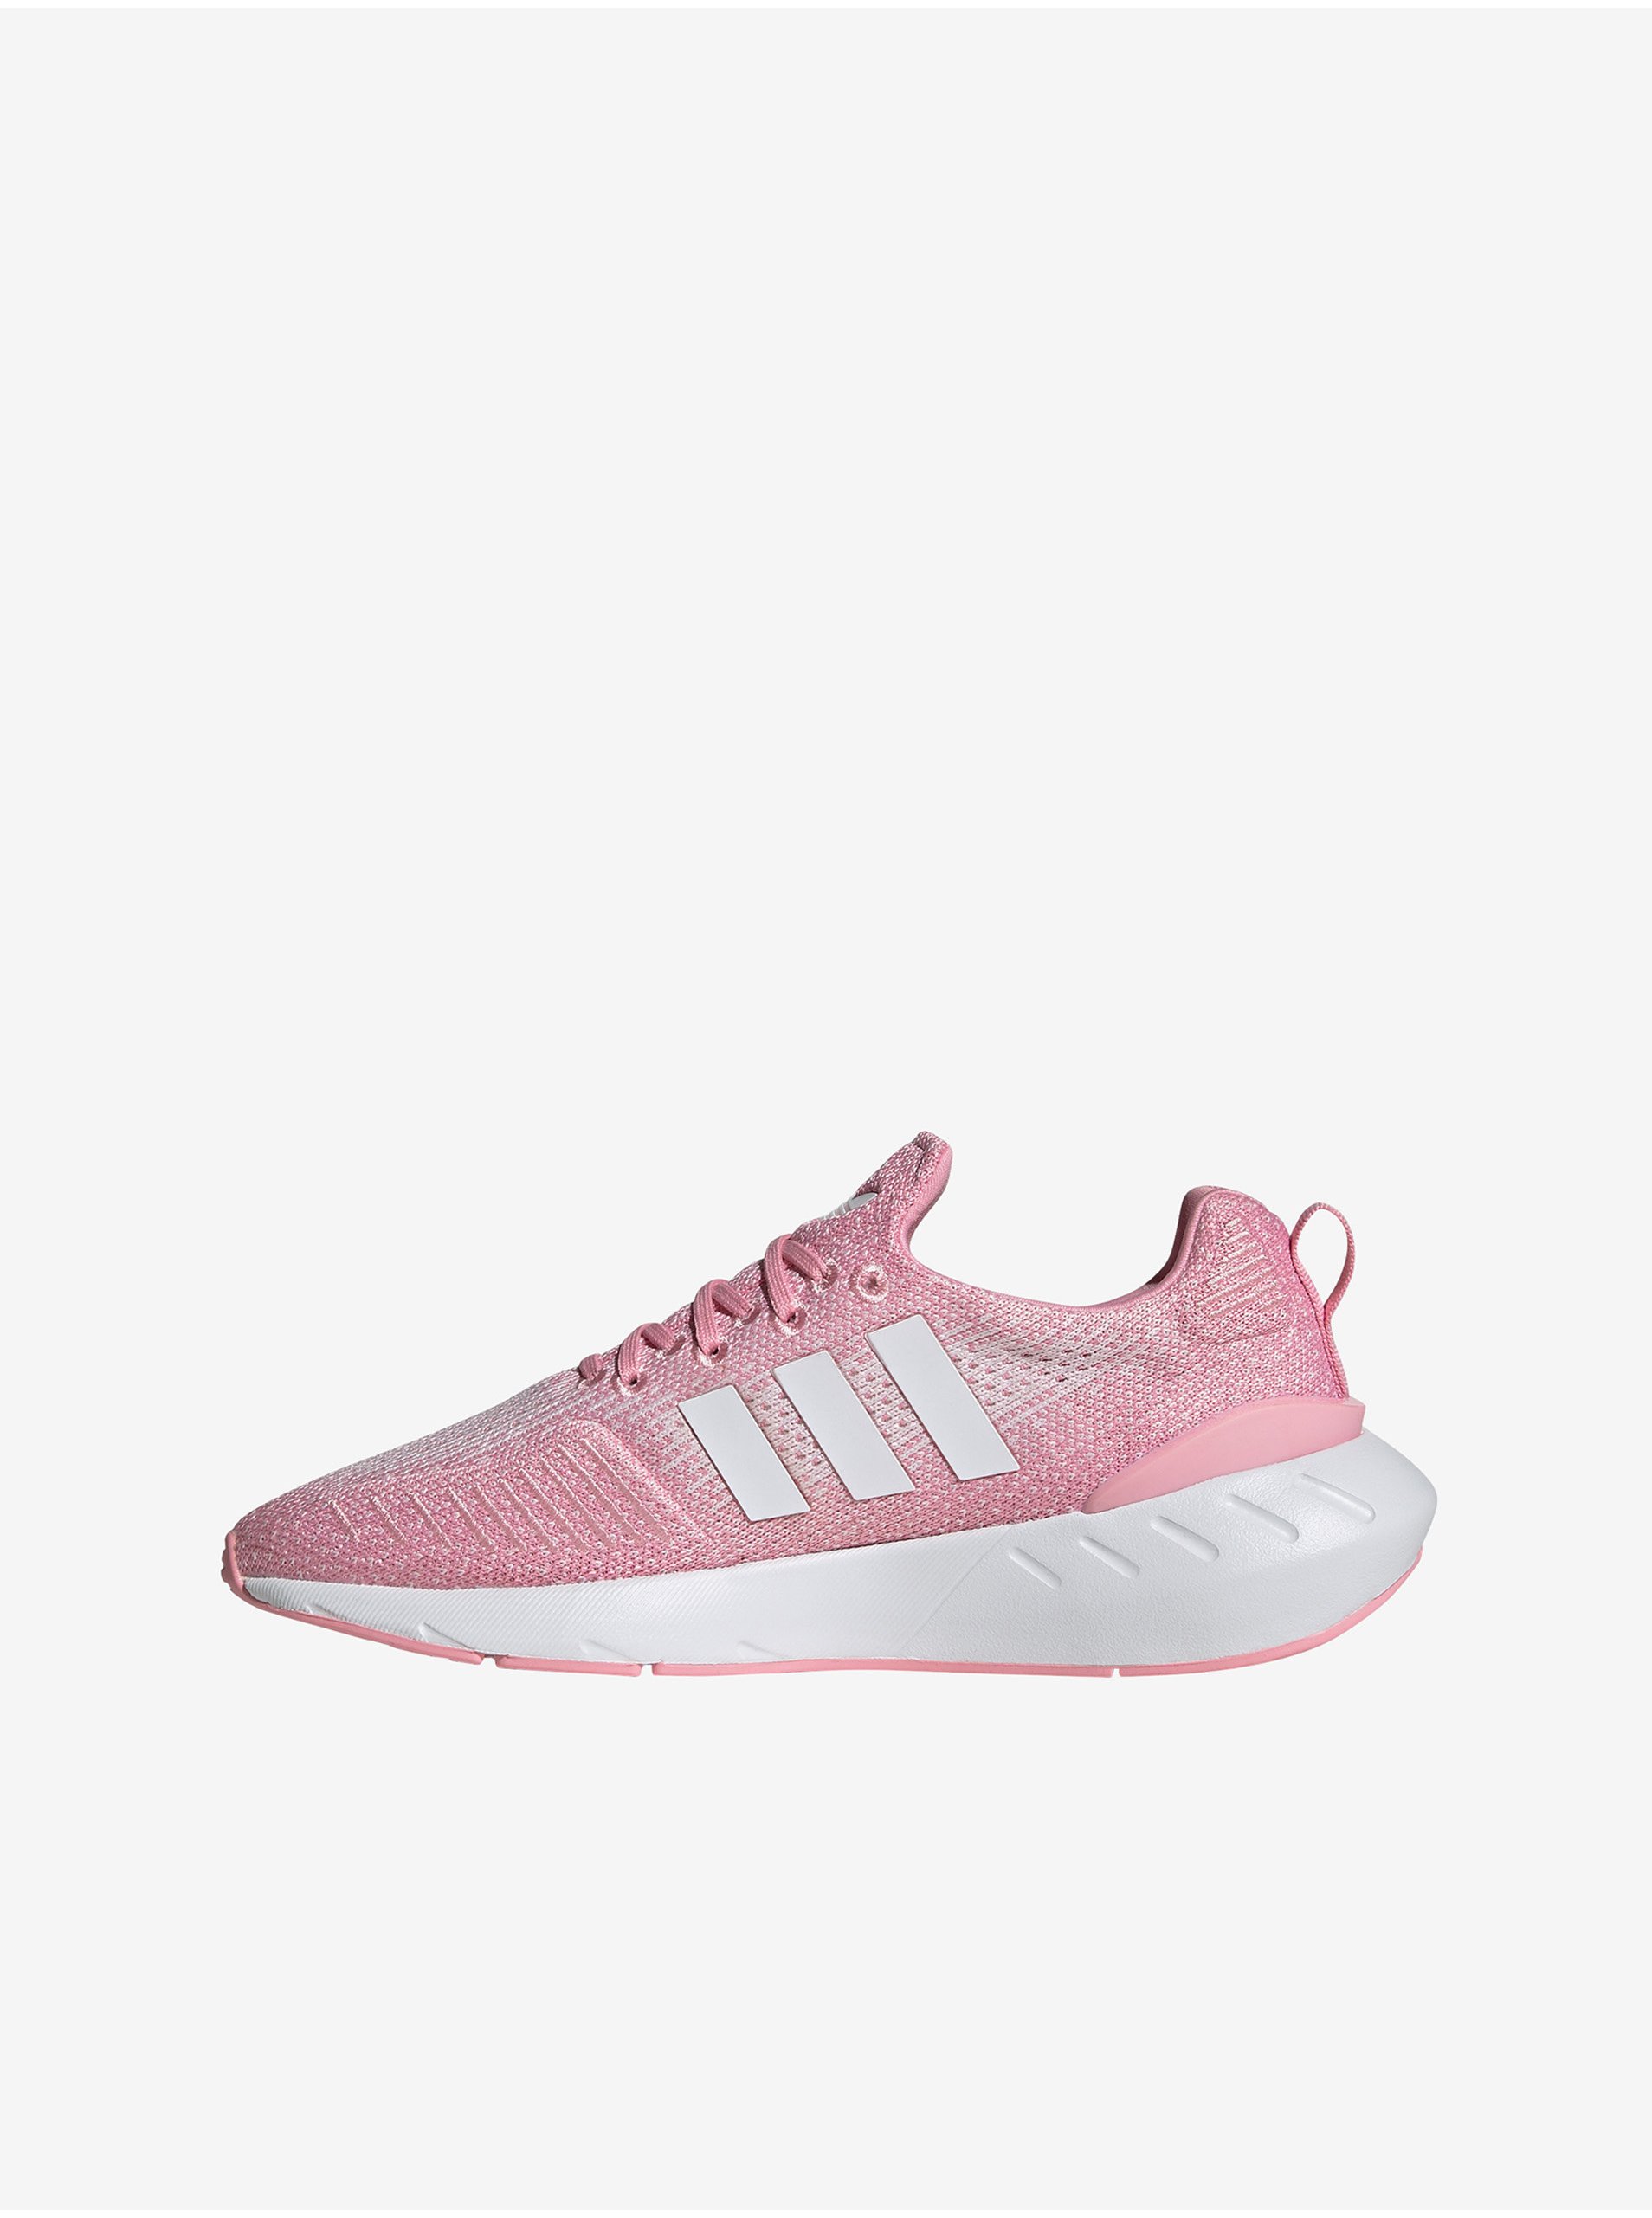 Lacno Ružové dámske tenisky adidas Originals Swift Run 22